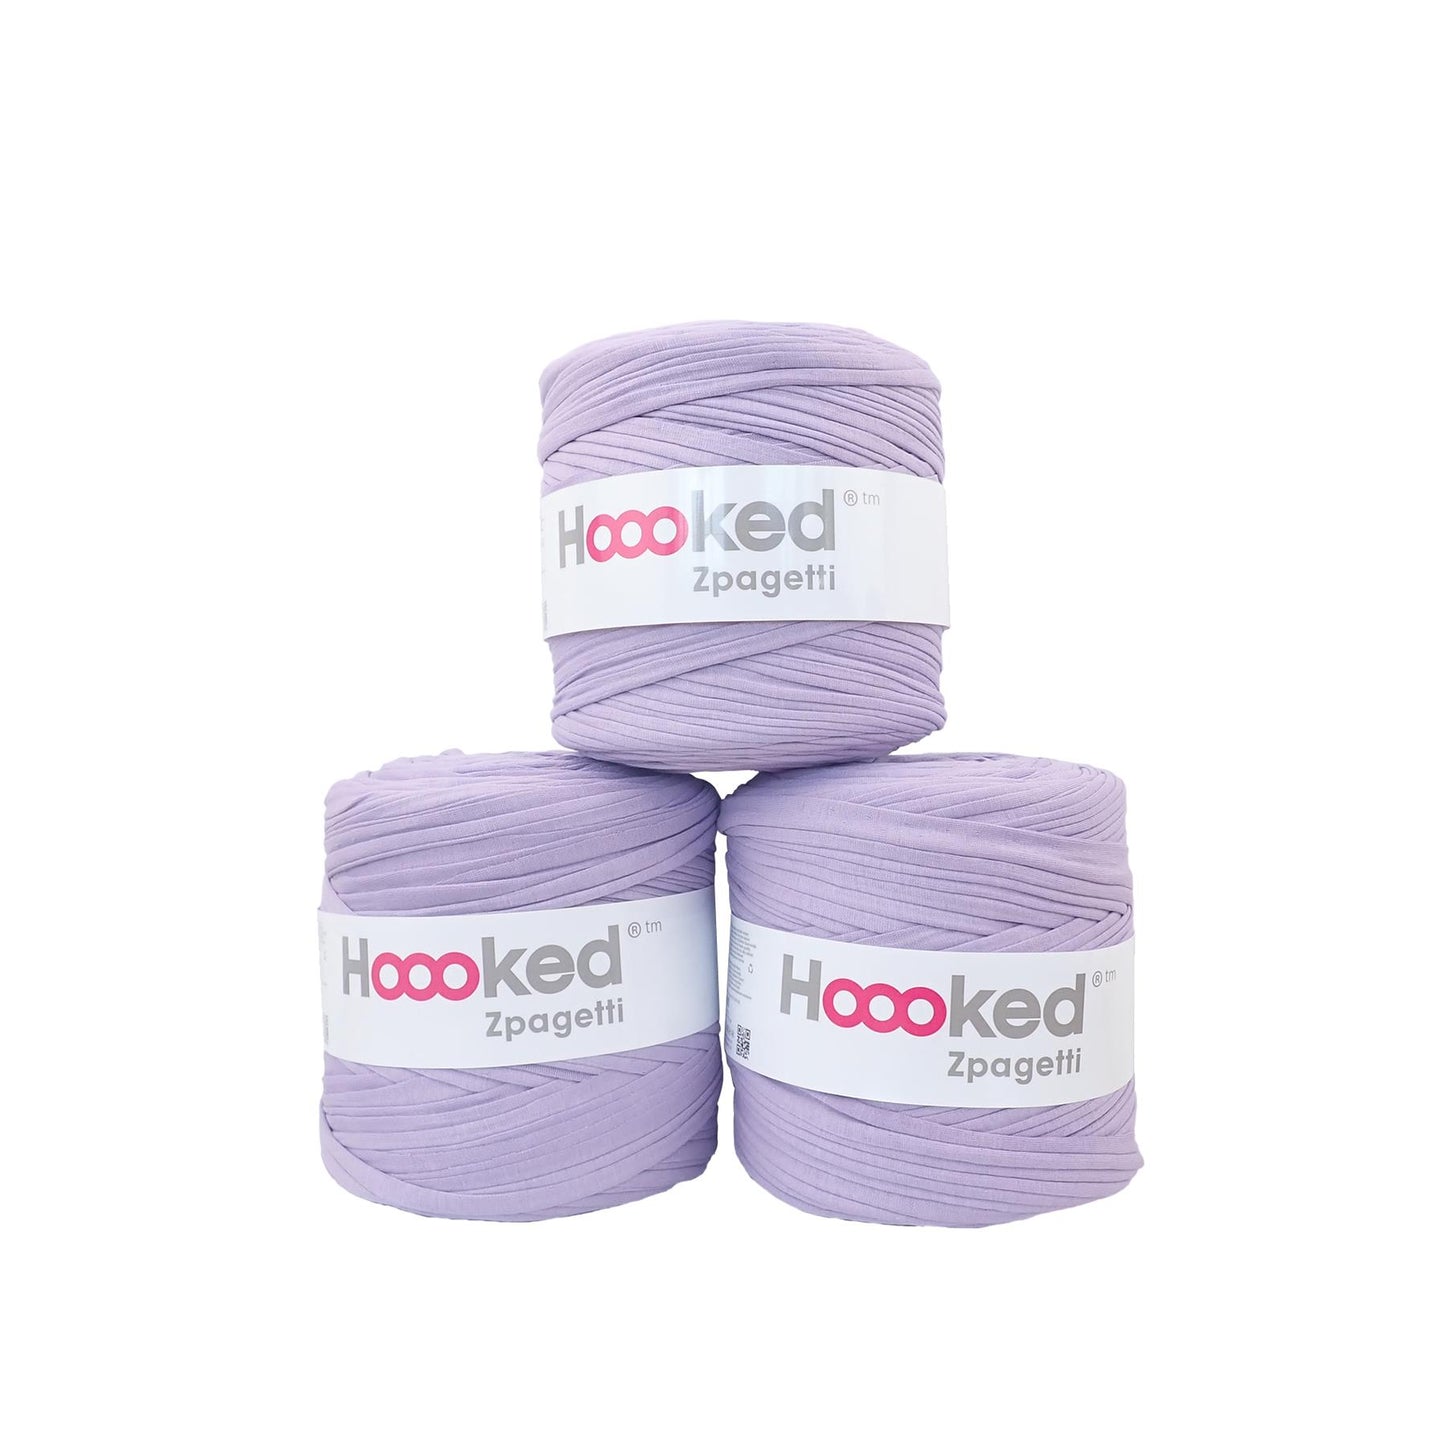 Hoooked Zpagetti Lilac Purple Cotton T-Shirt Yarn - 120M 700g (Pack of 3)